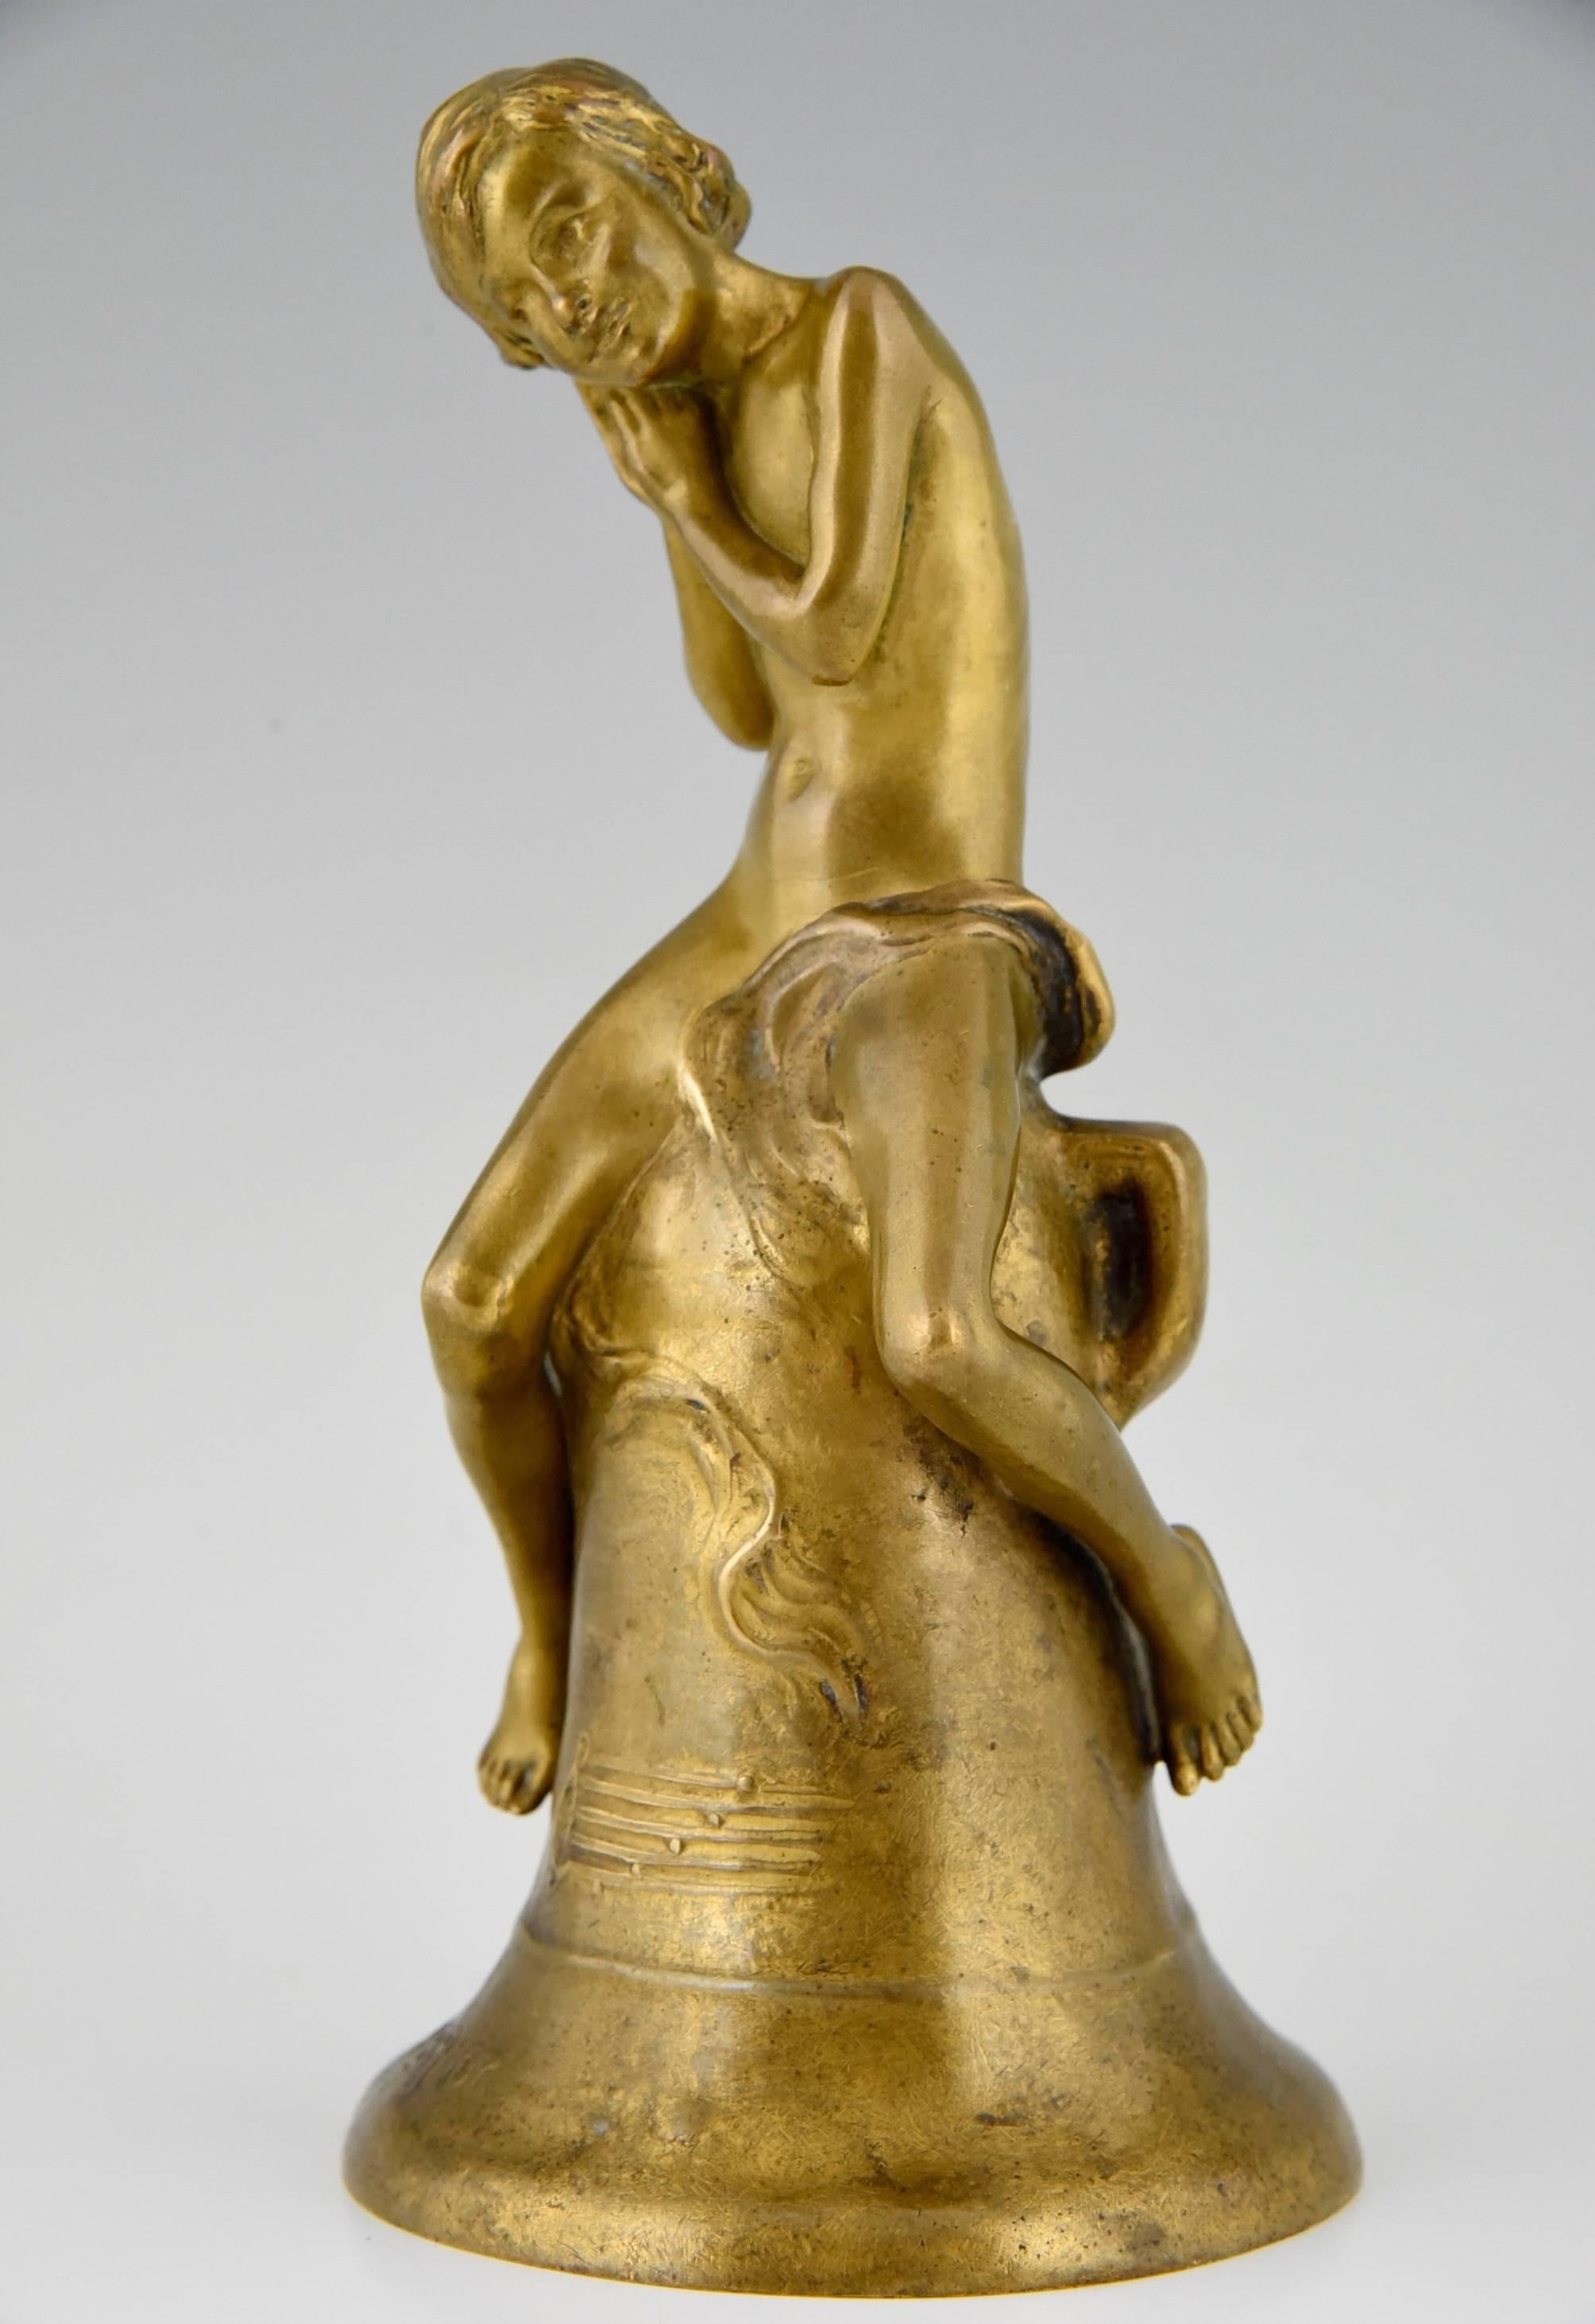 Description: Antique gilt bronze sculpture of a boy on a bell. 
Artist/Maker:  Henri Pernot. 
Signature/Marks: Pernot. Susse Freres foundry seal.
Style:  Art Nouveau. 
Date:  1910.
Material: Bronze gilded. 
Origin:  France. 
Size:  
H 7.5